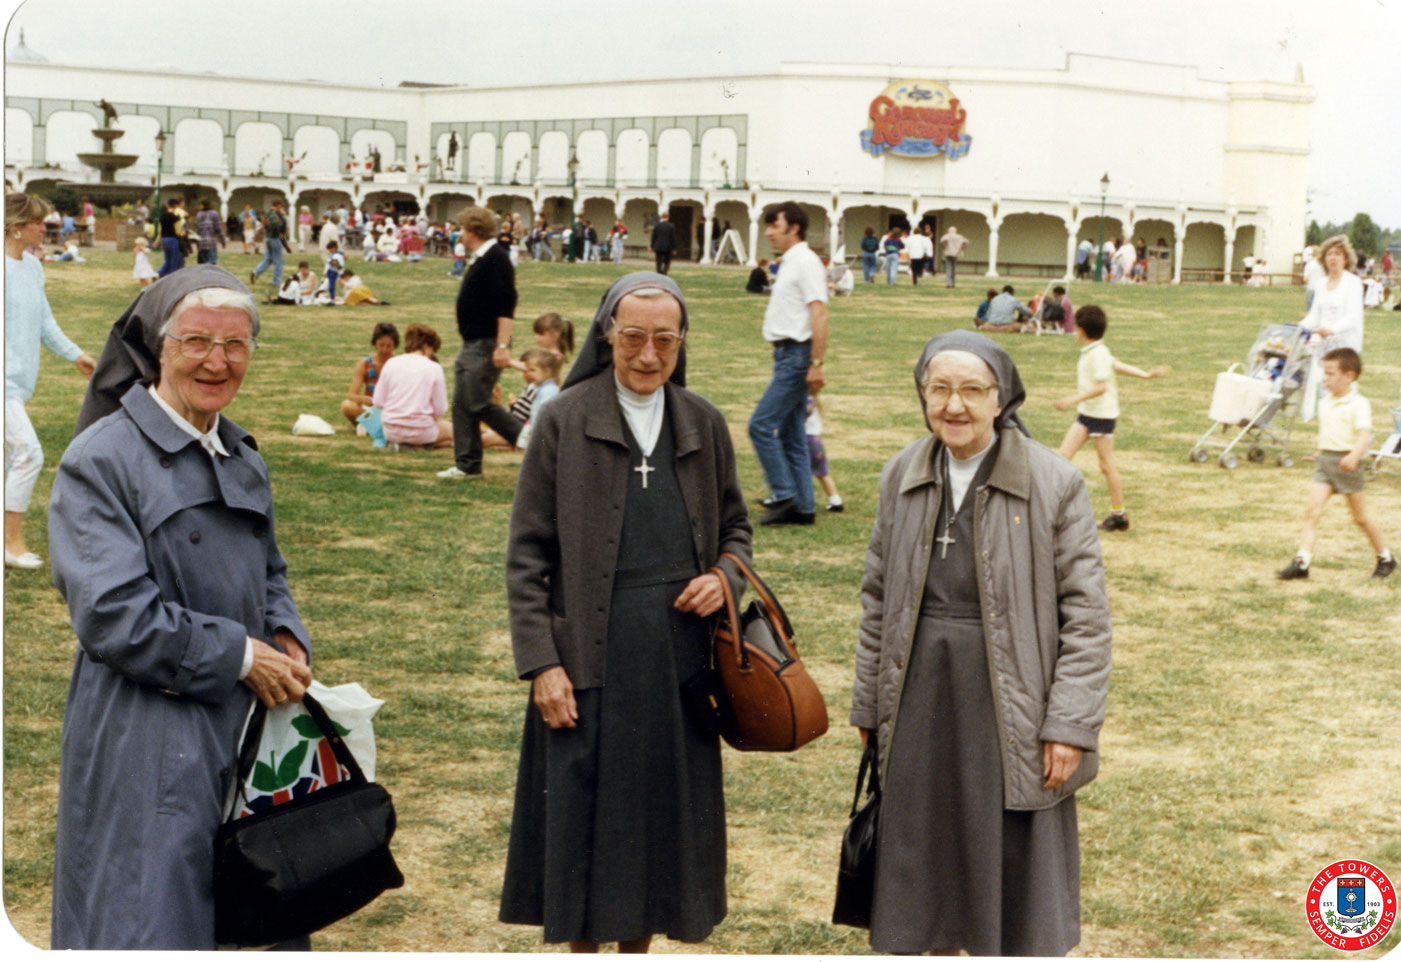 Sisters-at-Thorpe-Park-1990